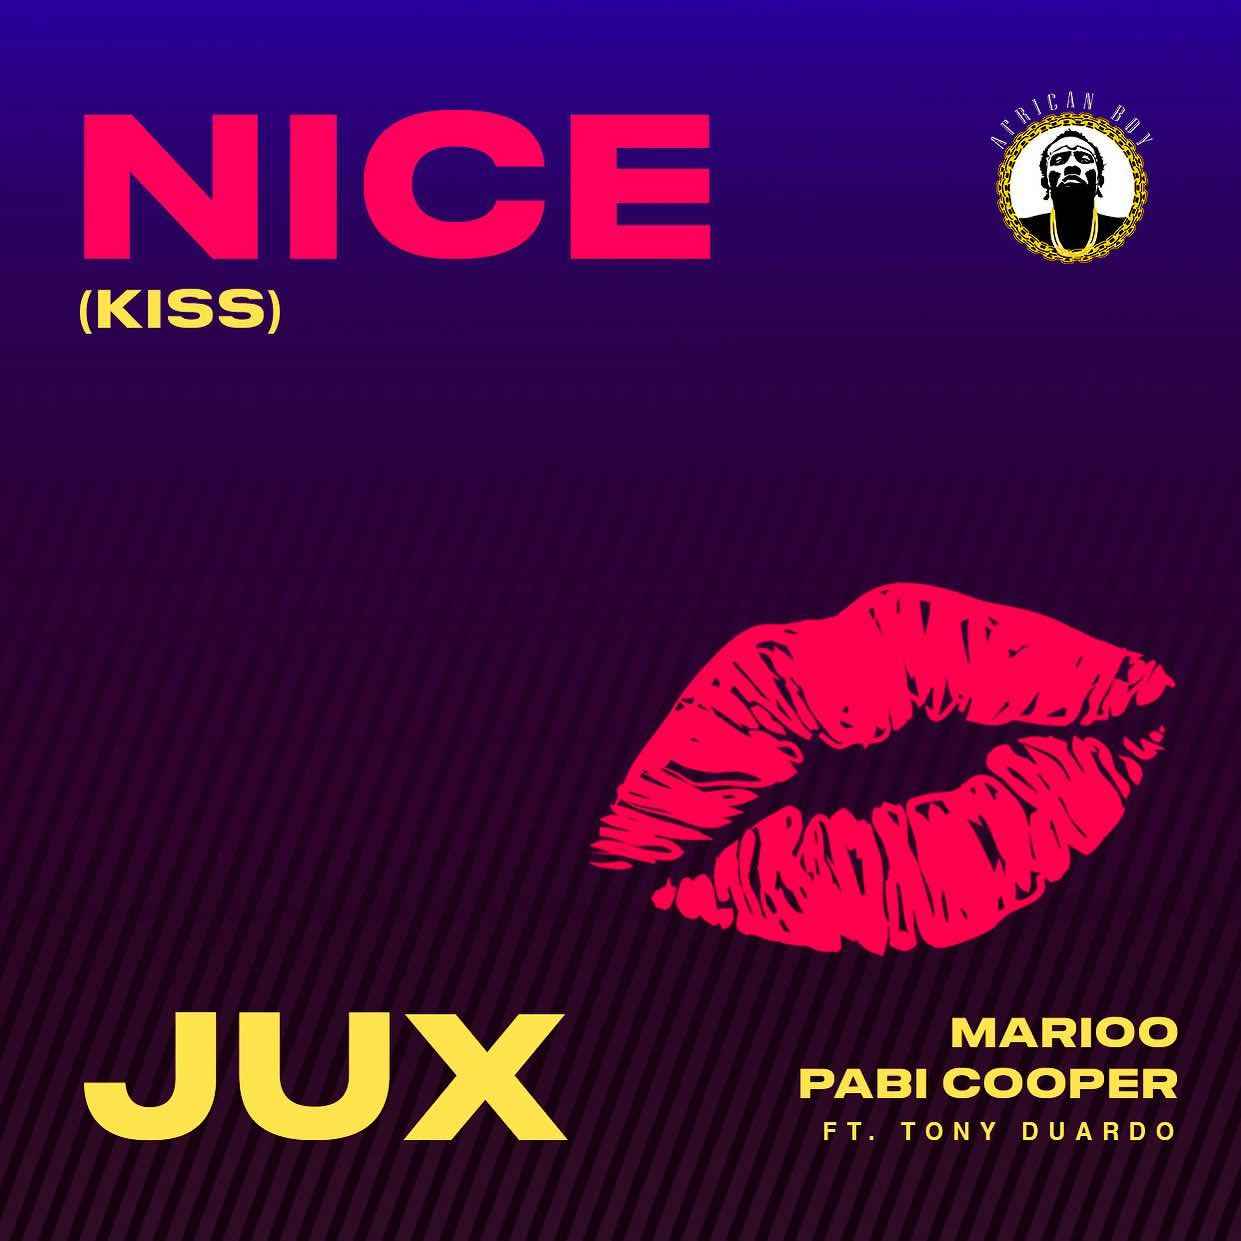 Jux ft Marioo, Pabi Cooper x Tony Duardo - Nice (Kiss) Mp3 Download